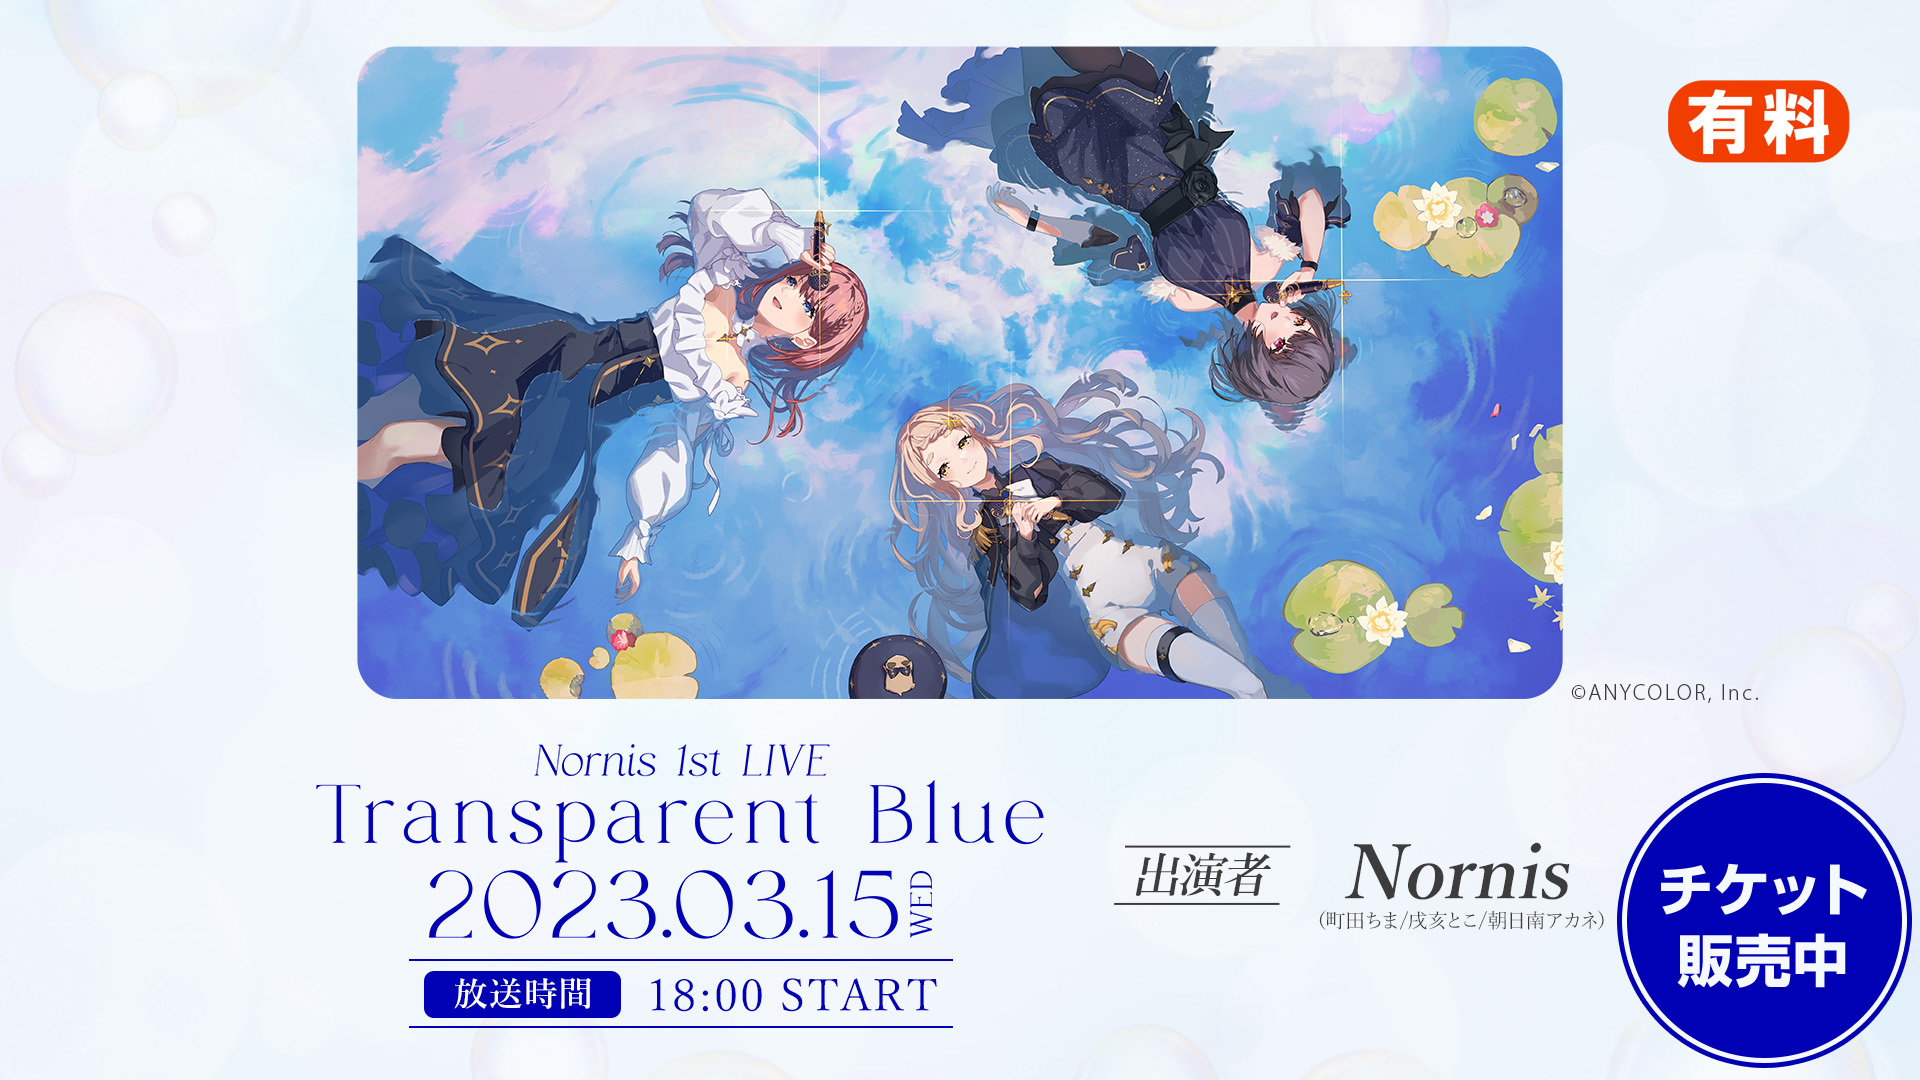 Nornis 1st LIVE -Transparent Blue-